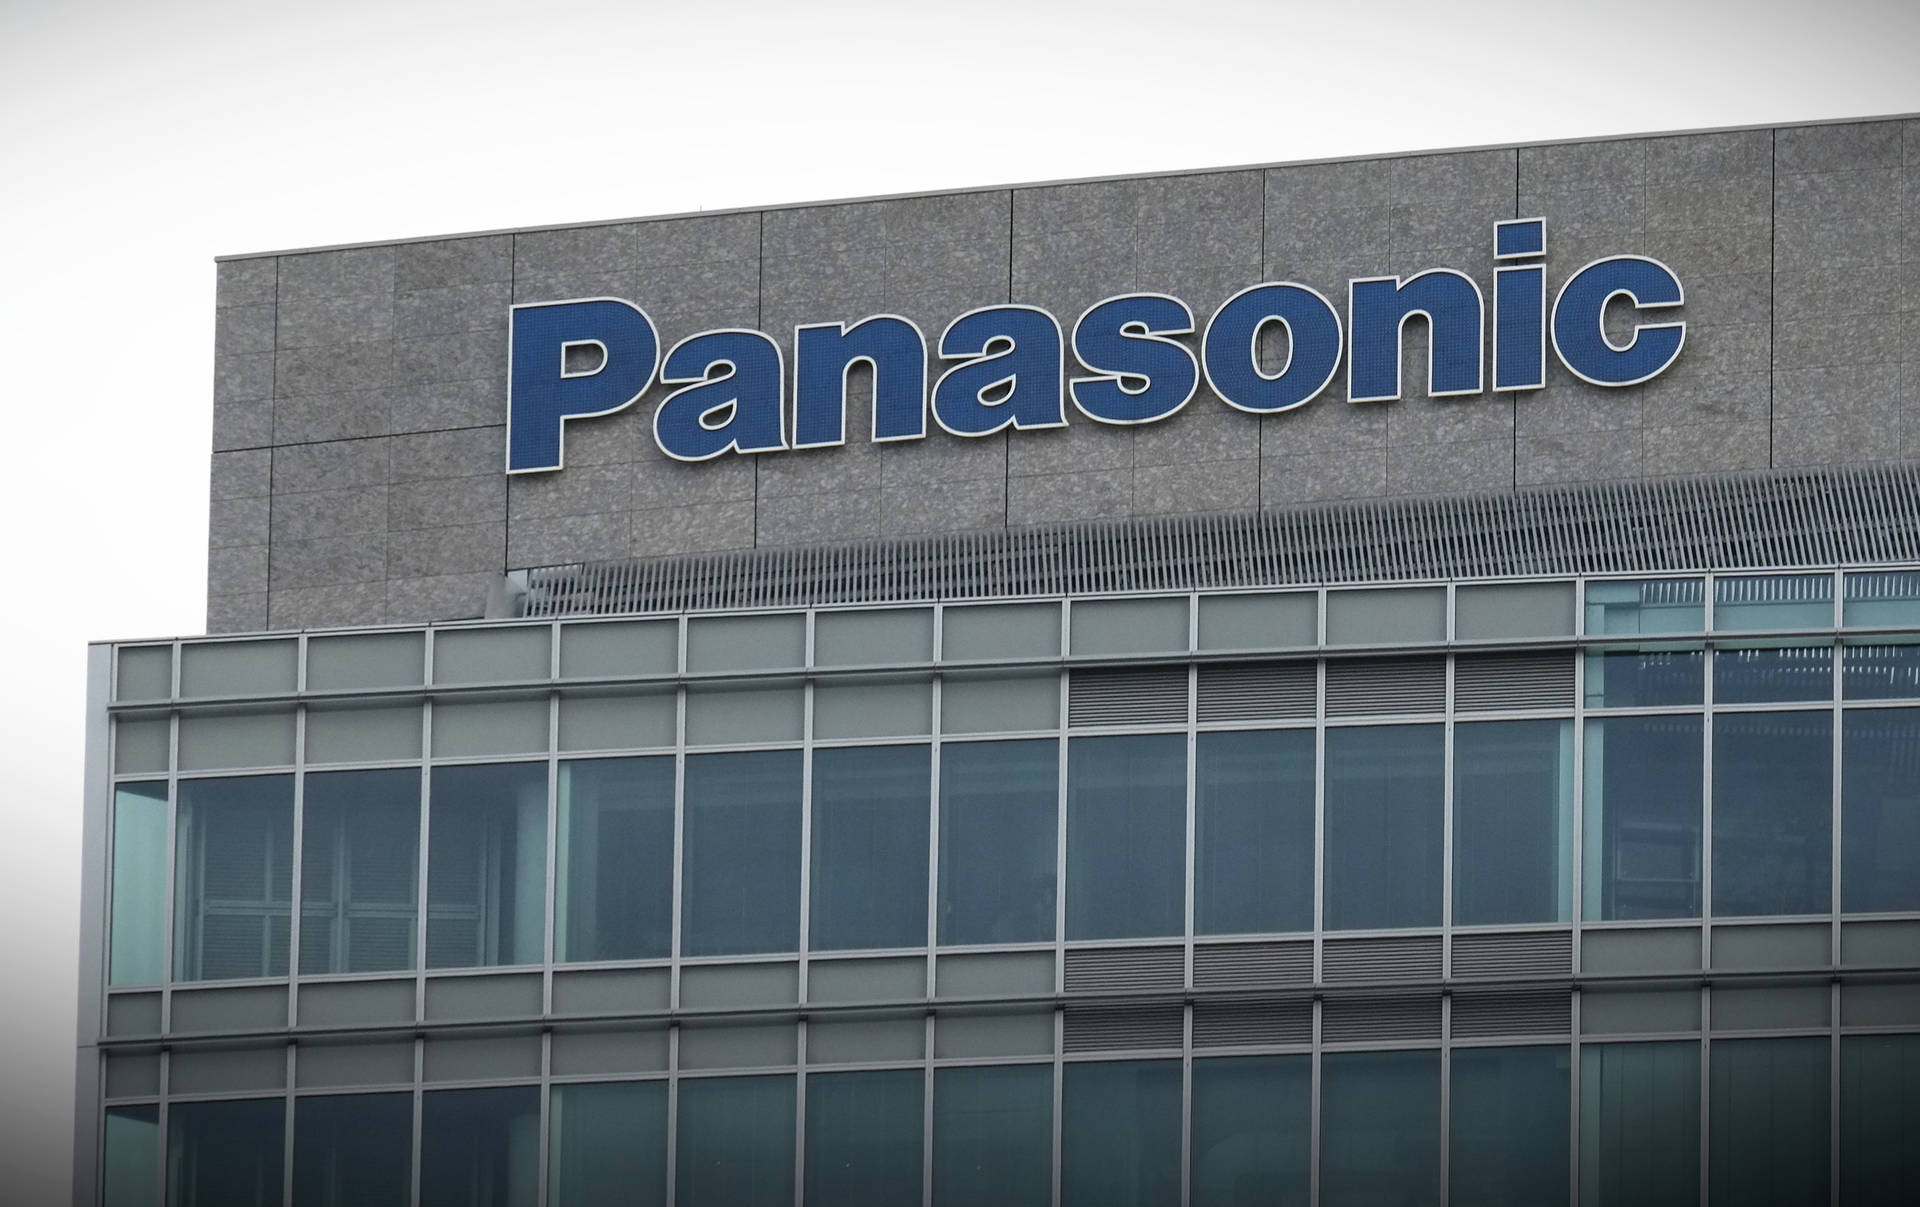 Panasonic Grey Building Background